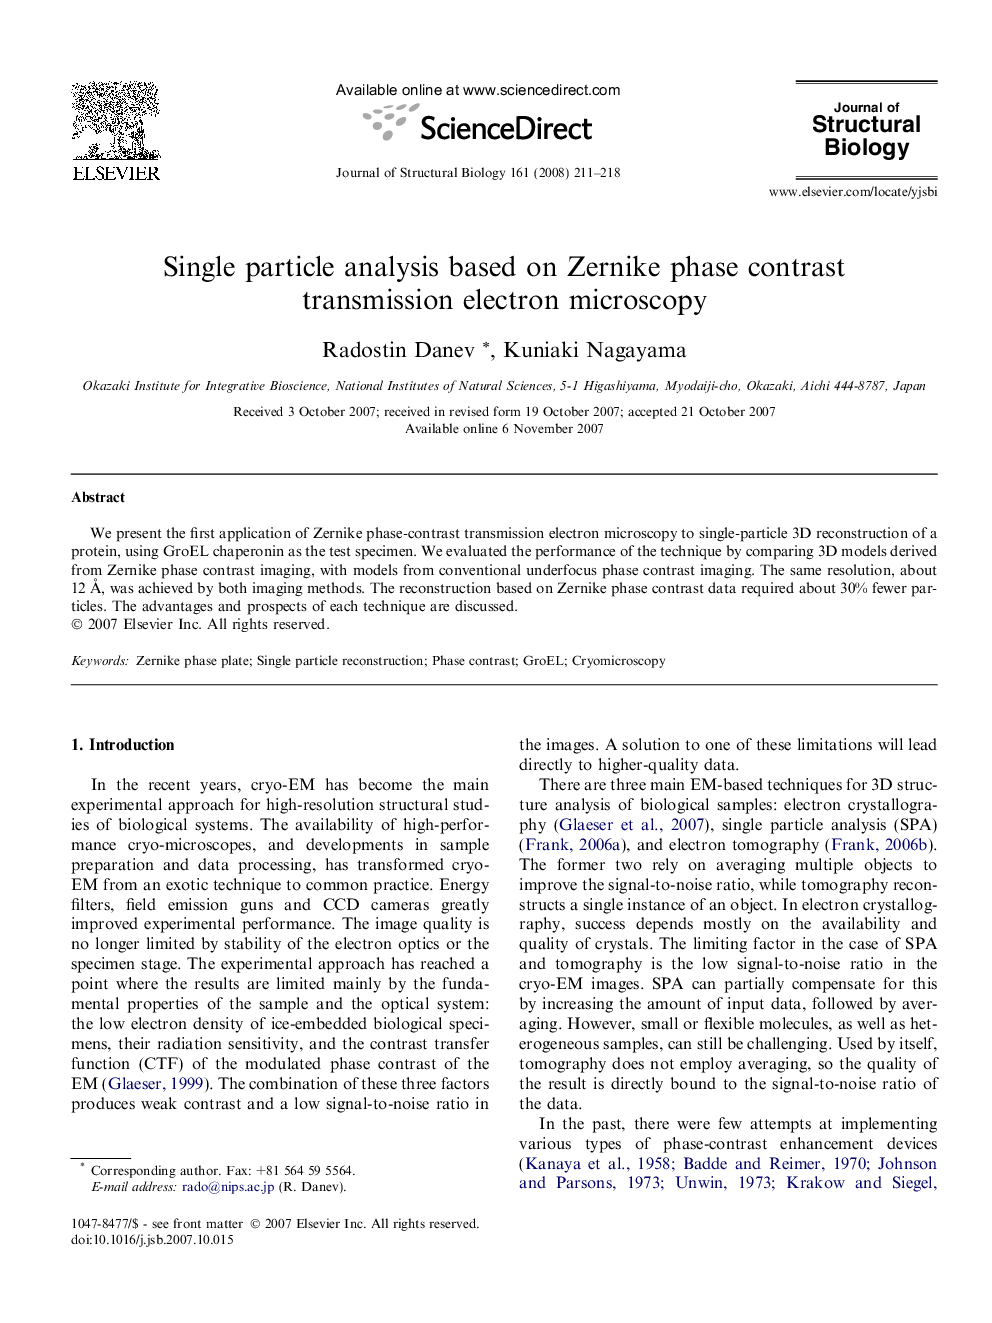 Single particle analysis based on Zernike phase contrast transmission electron microscopy